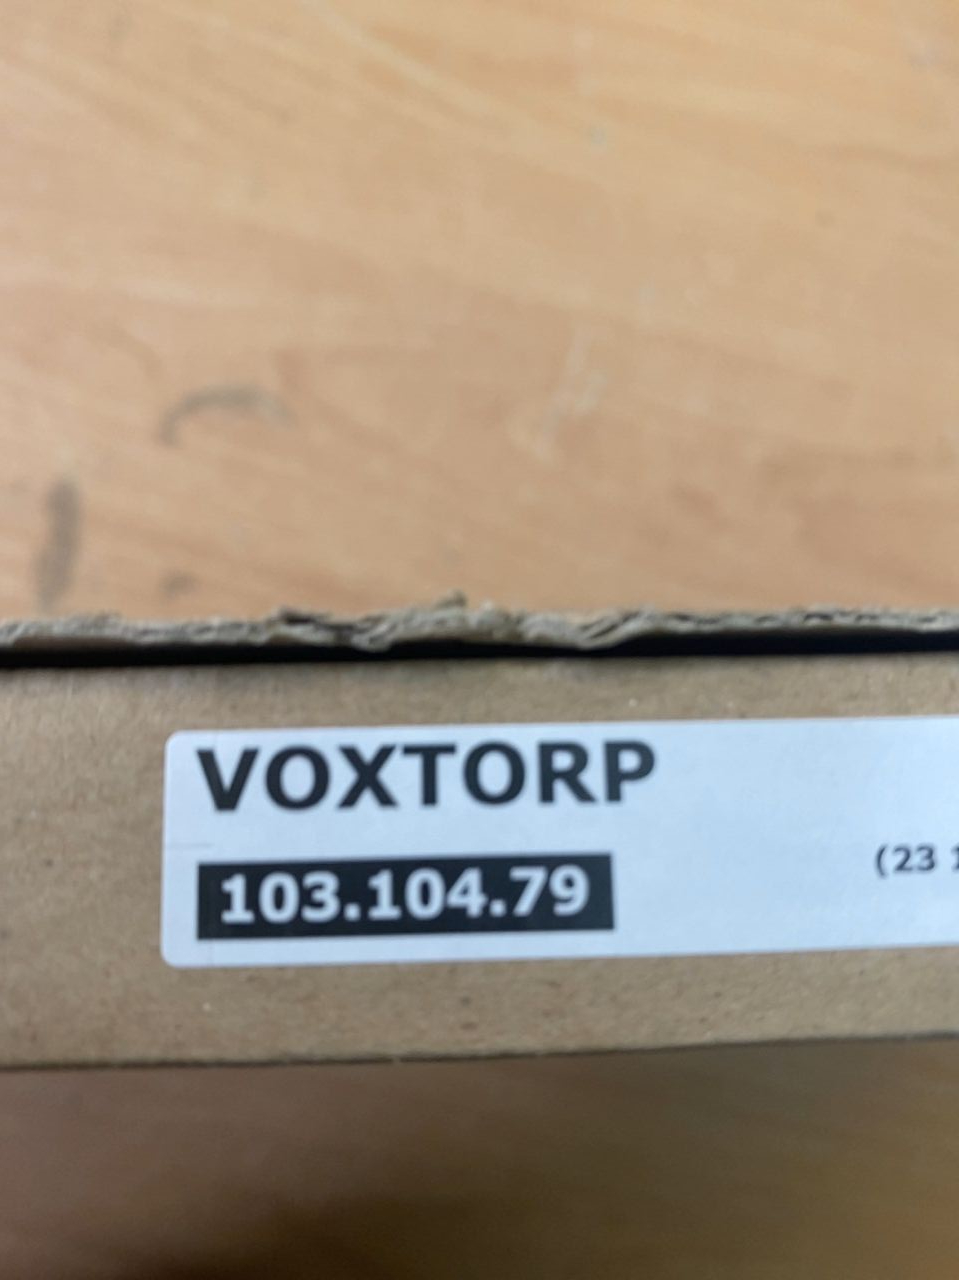 Čelo šuplíku Ikea Voxtorp, šedá, 60x20 cm